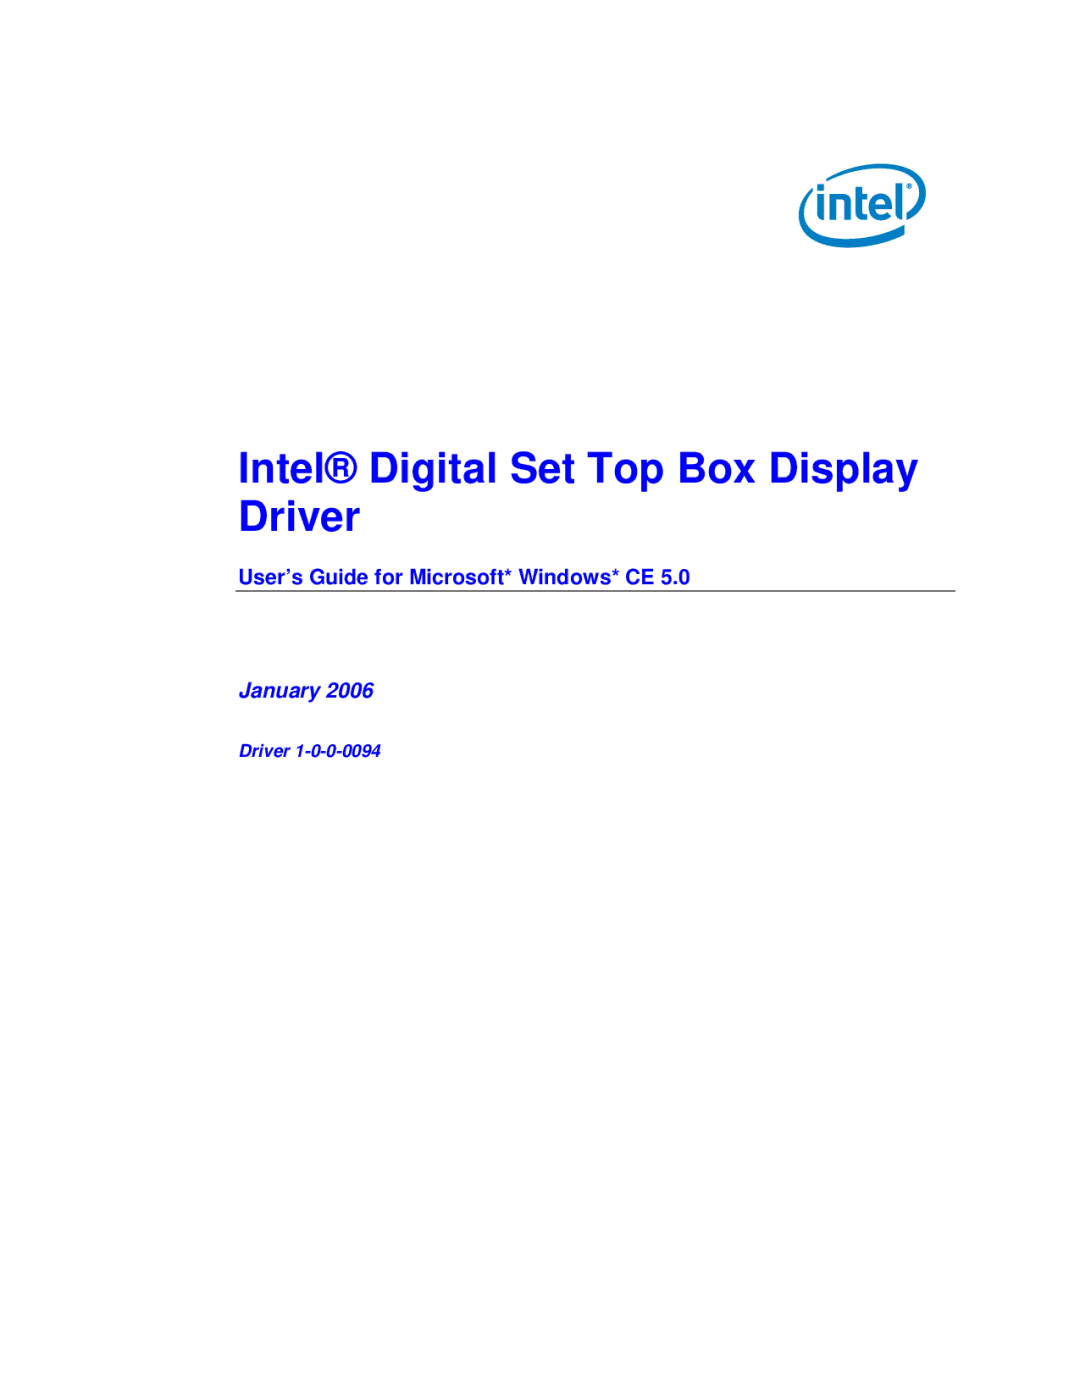 Intel 82854 GMCH, 82830M GMCH manual Intel Digital Set Top Box Display Driver 